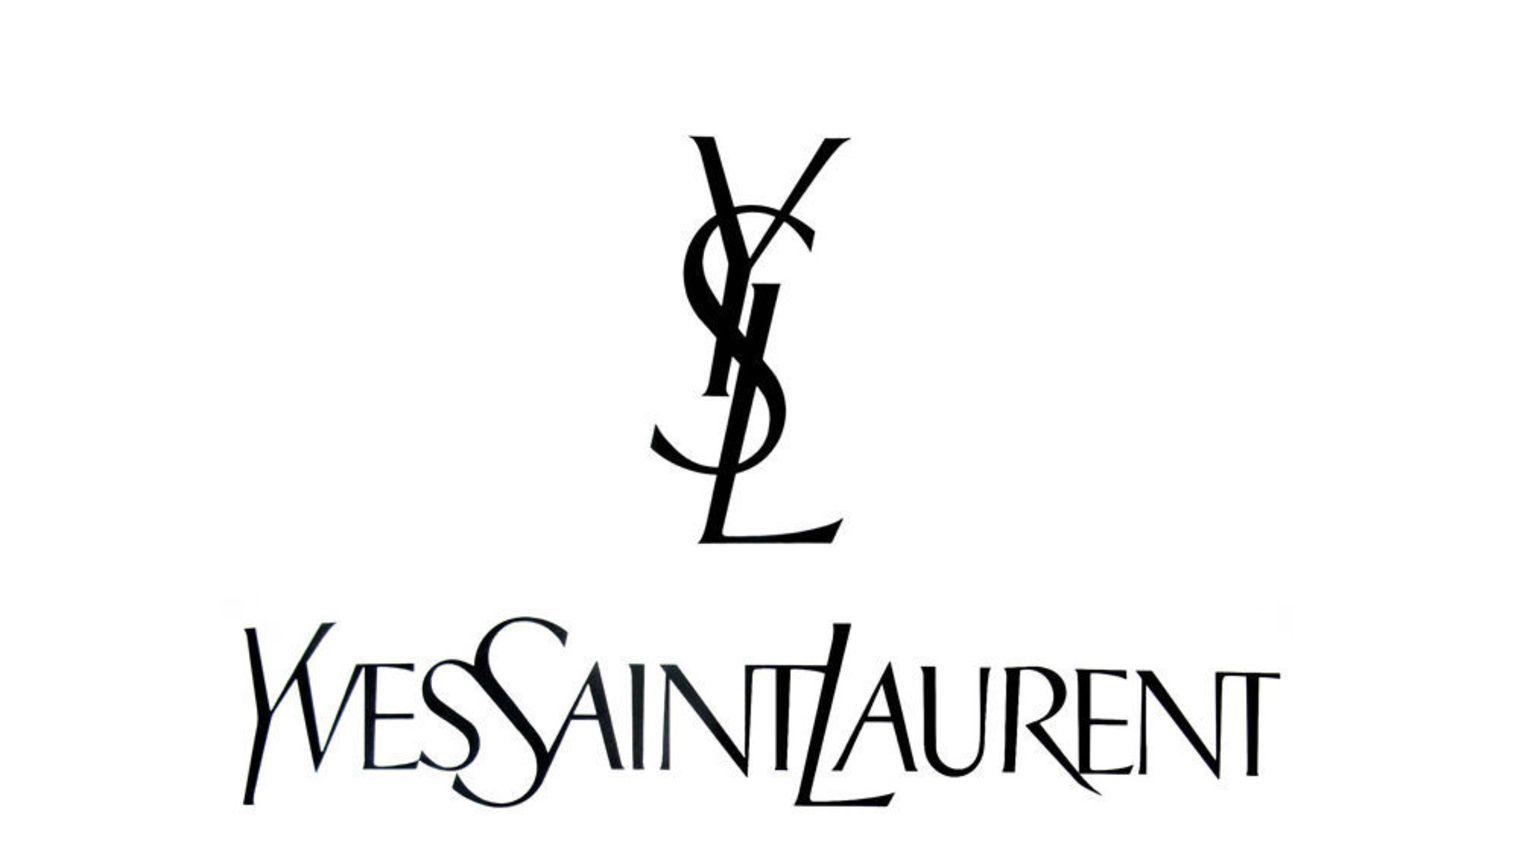 Saint laurent Logos